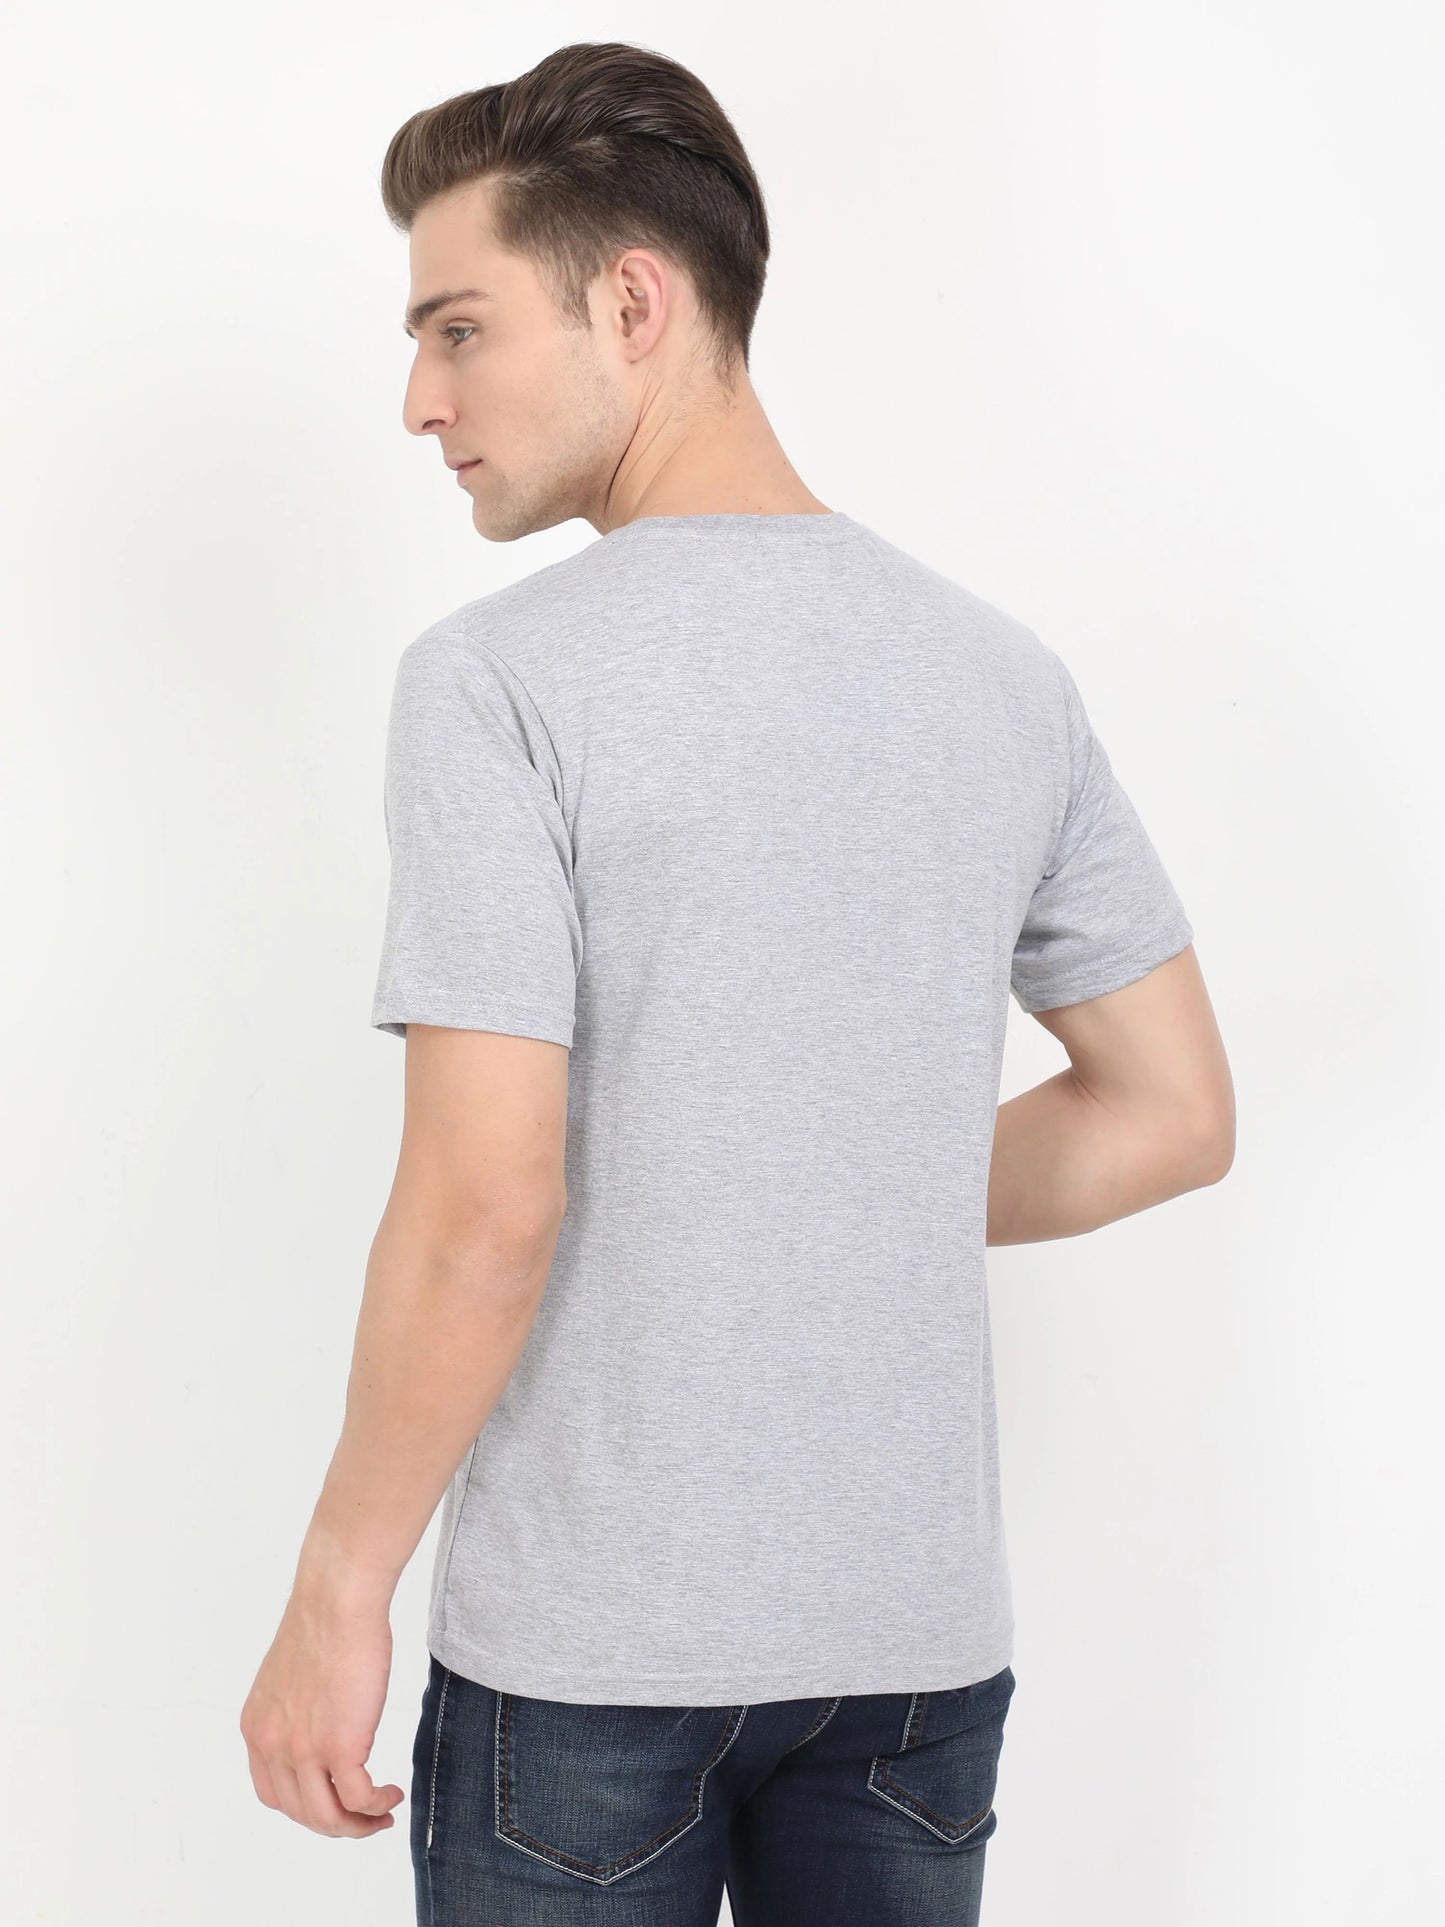 Fleximaa Men's Cotton Plain Round Neck Half Sleeve T-Shirt - fleximaa-so